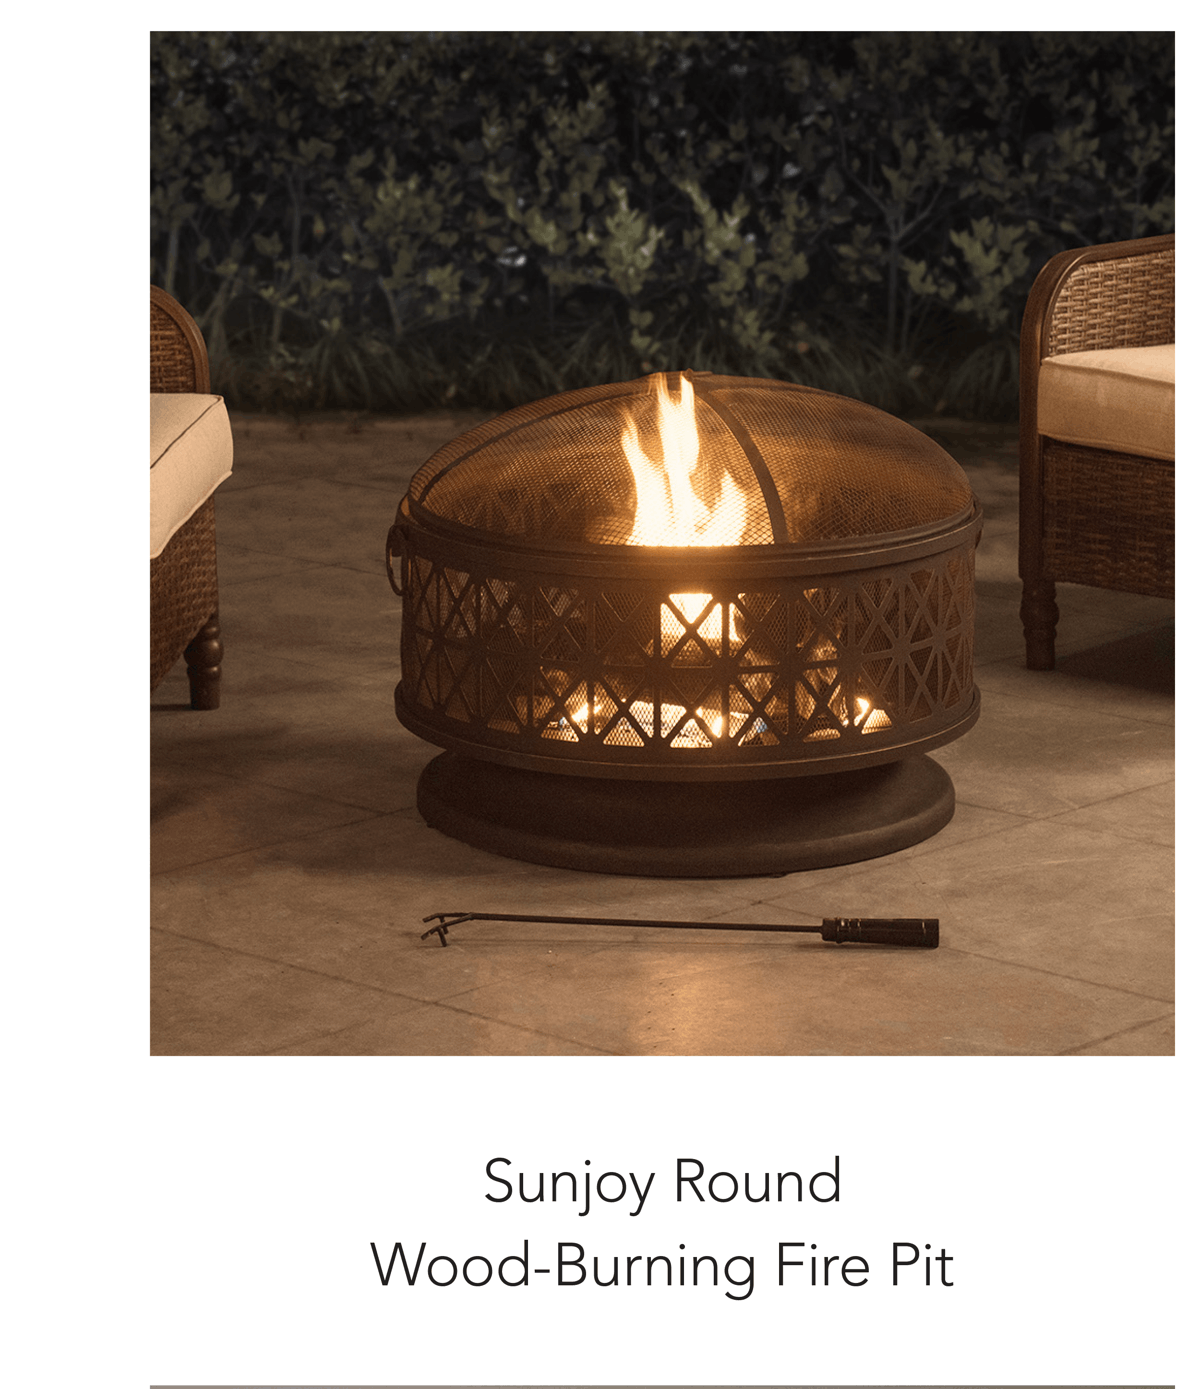 Sunjoy Round Wood-Burning Fire Pit